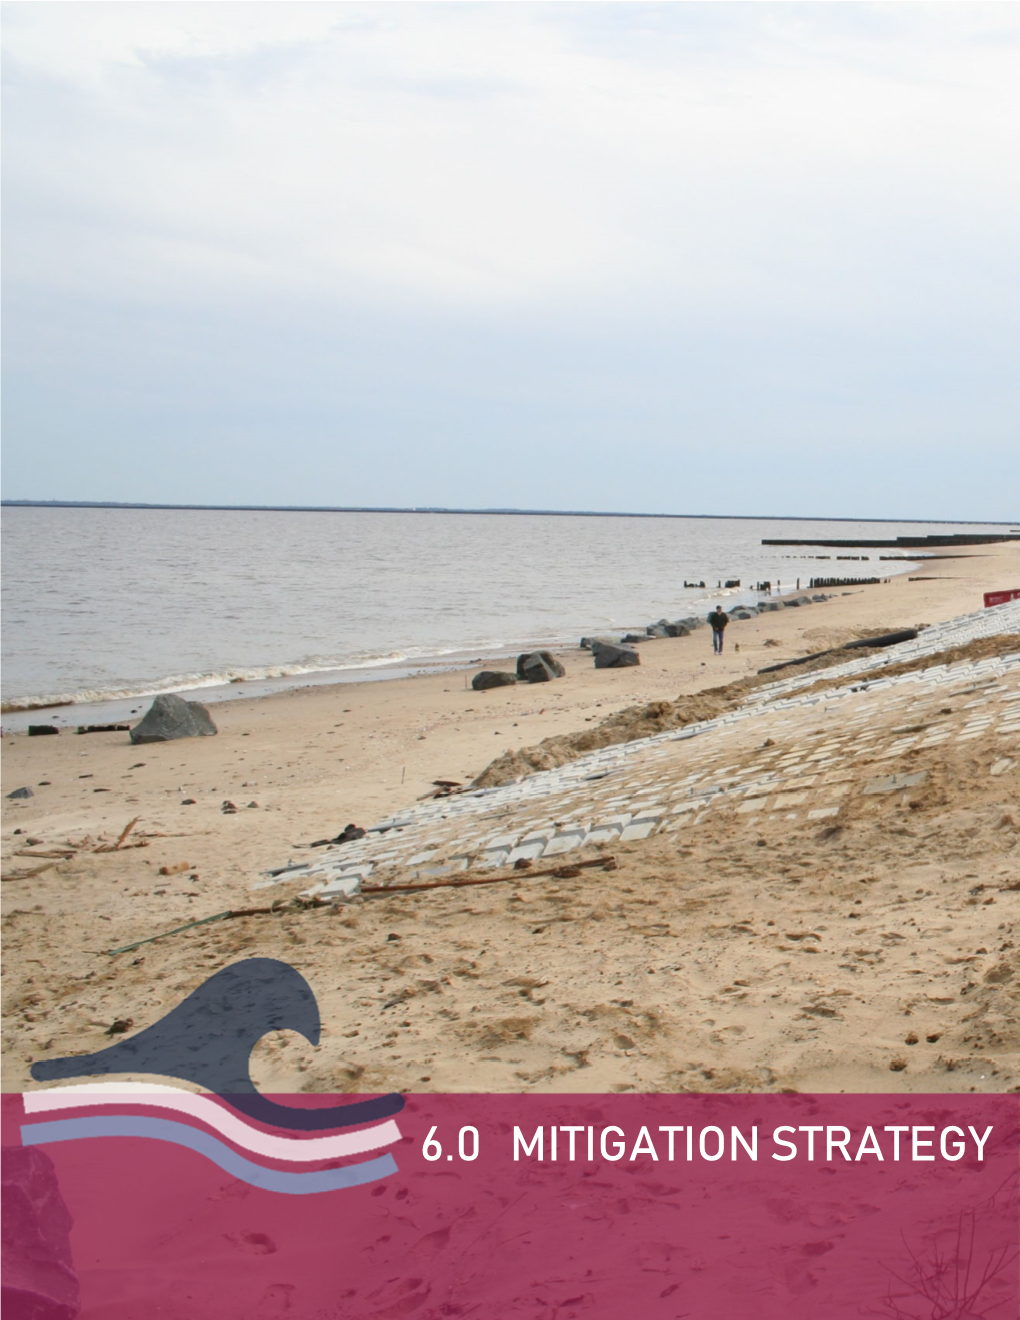 6.0 Mitigation Strategy